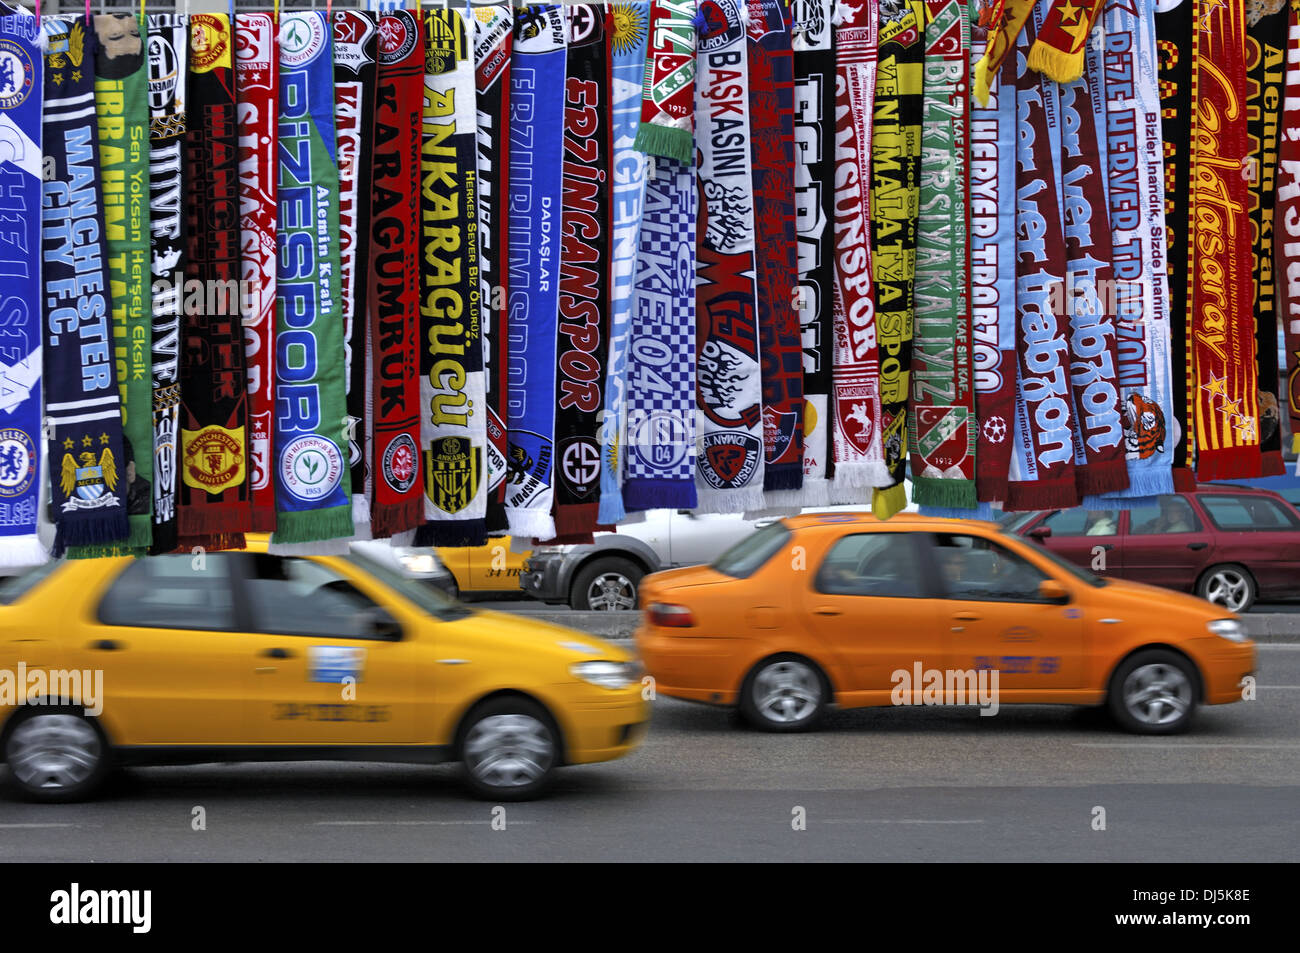 Football scarfs for sale, Istanbul Stock Photo